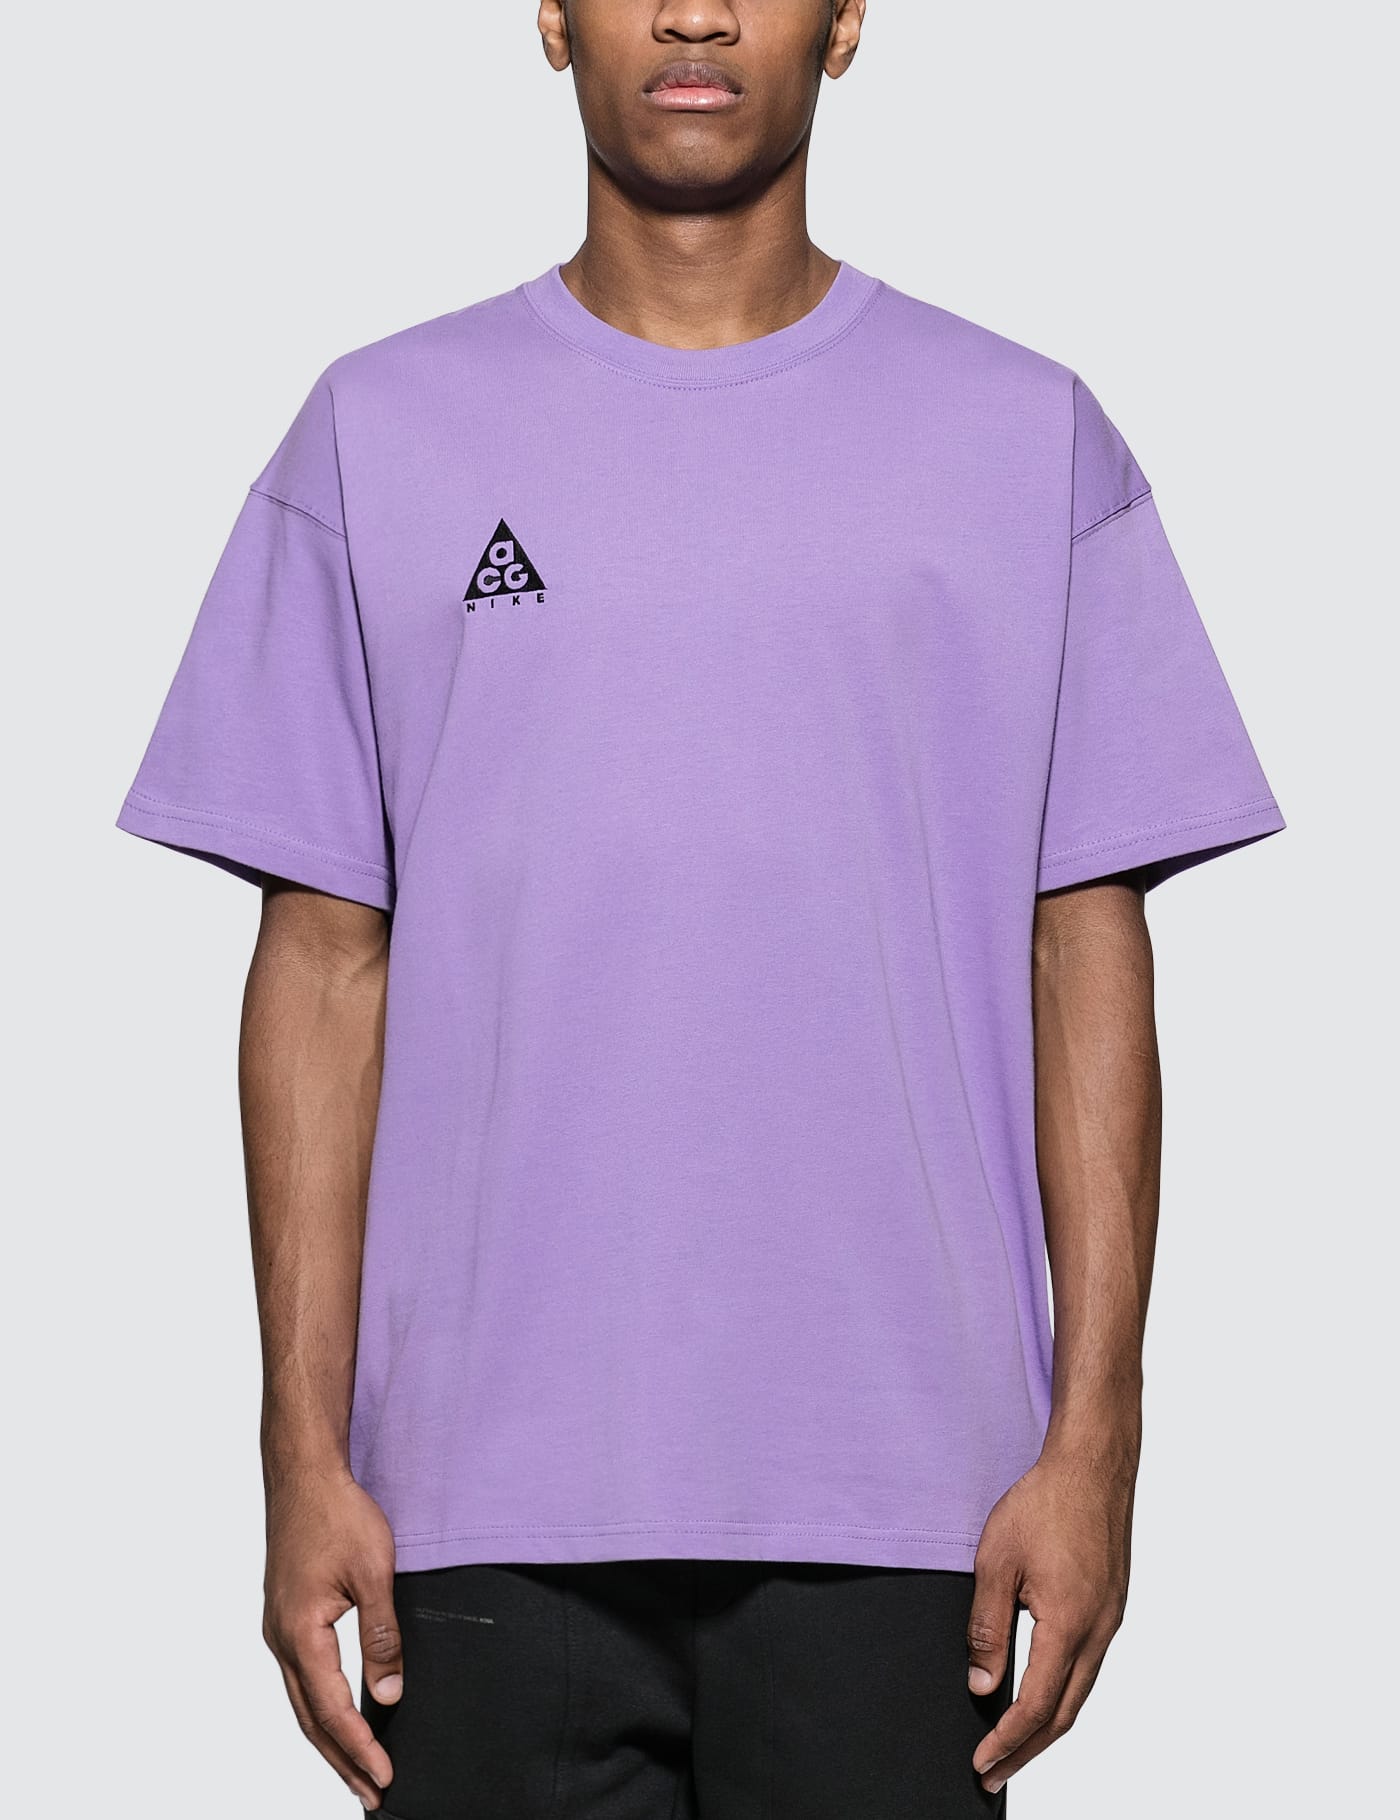 nike acg t shirt purple